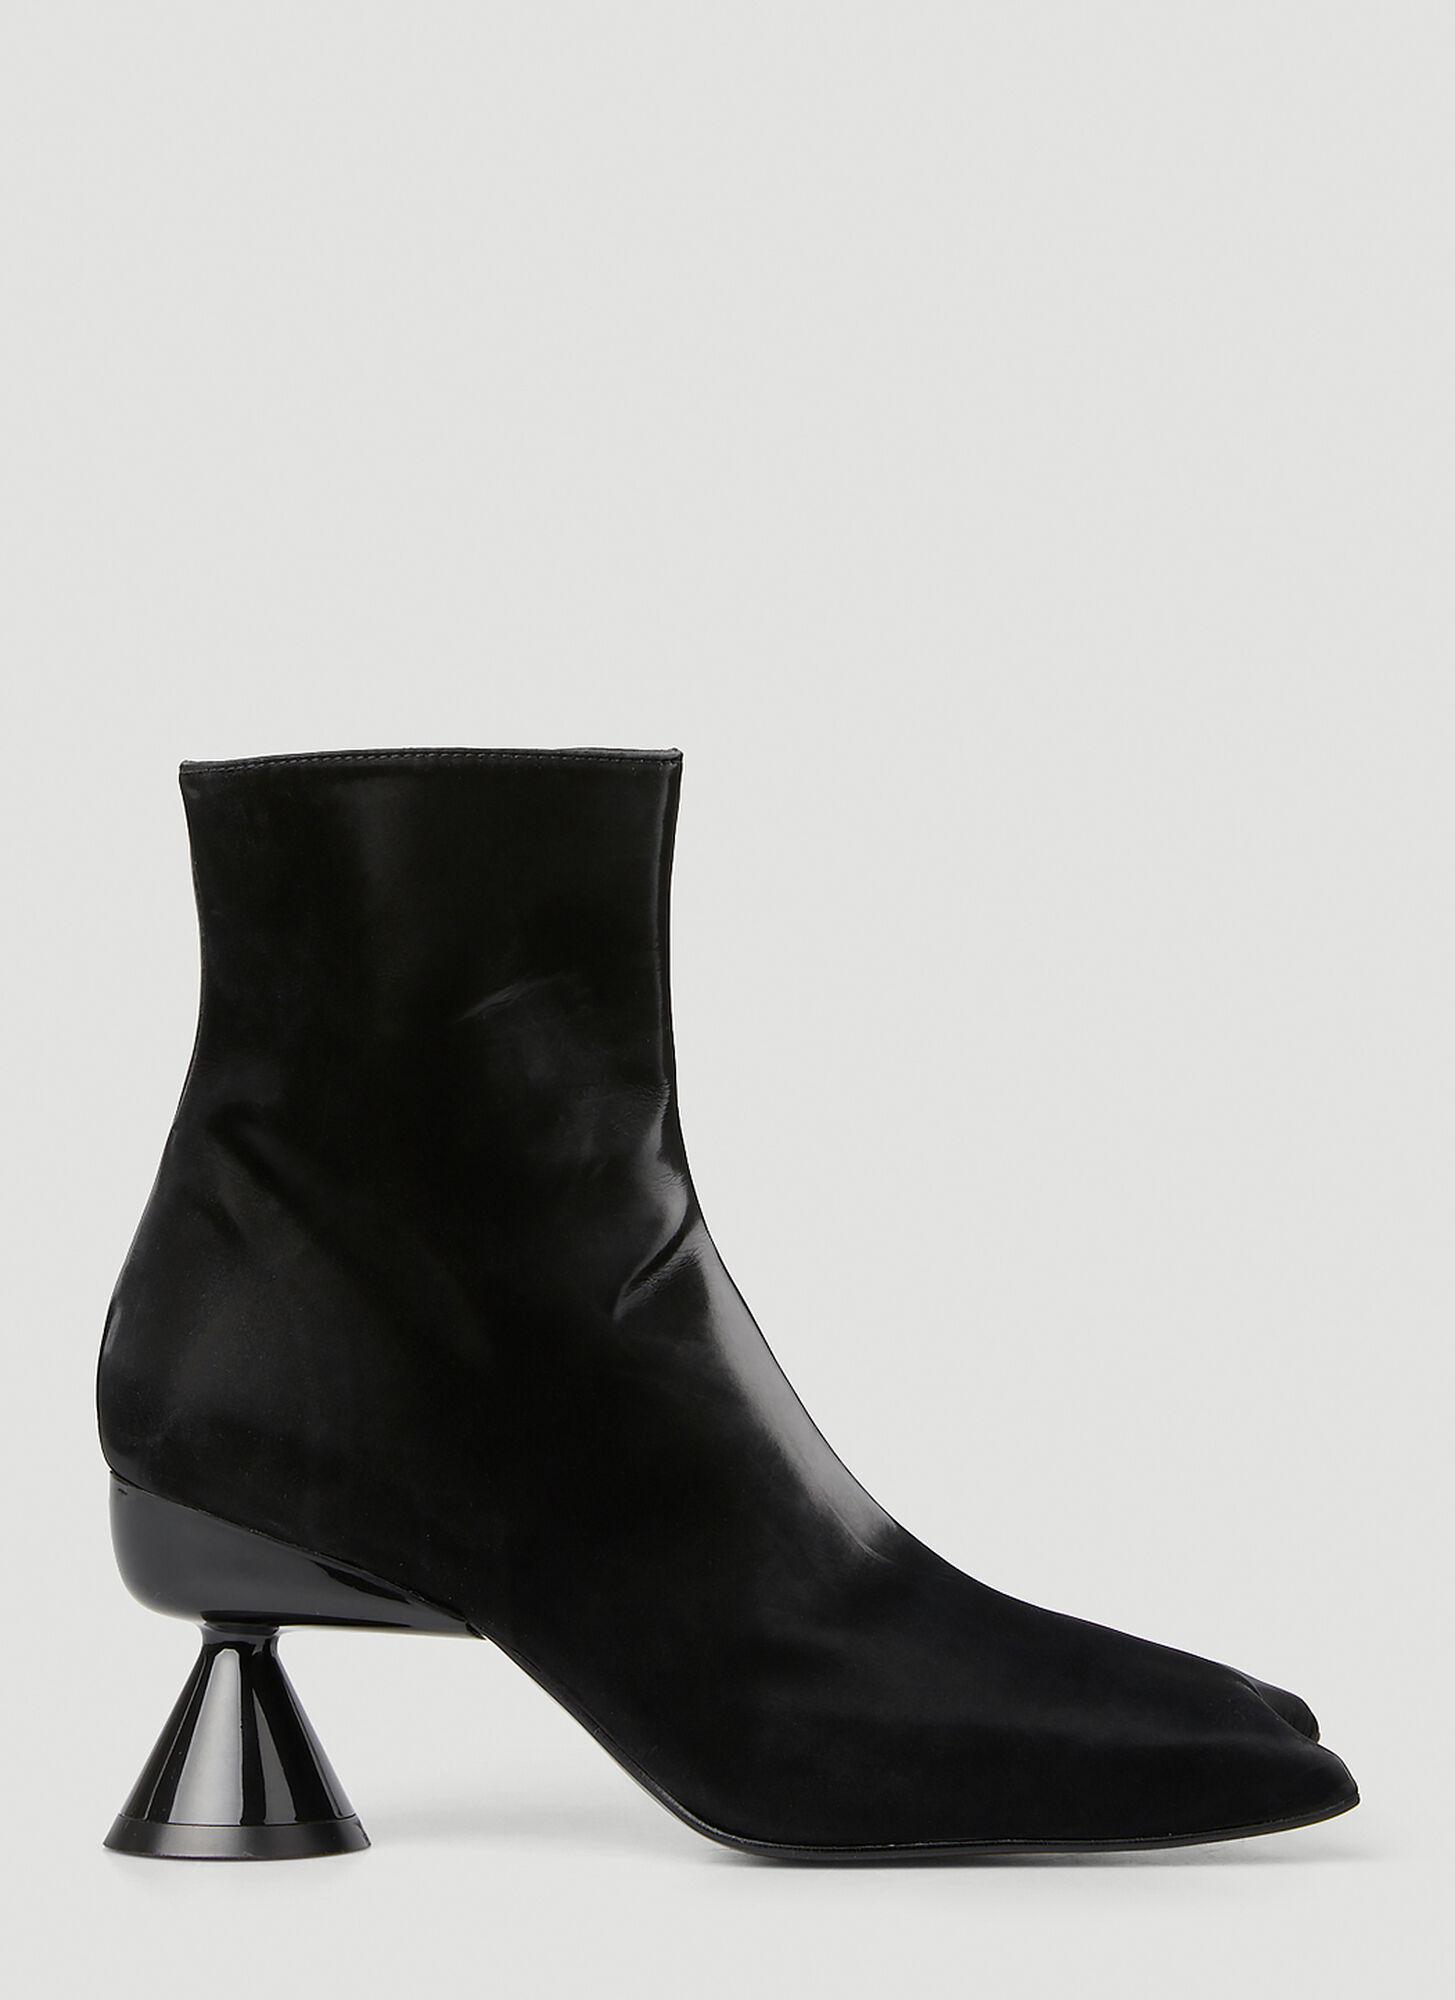 PAULA CANOVAS DEL VAS Diablo Ankle Boots in Black | Lyst